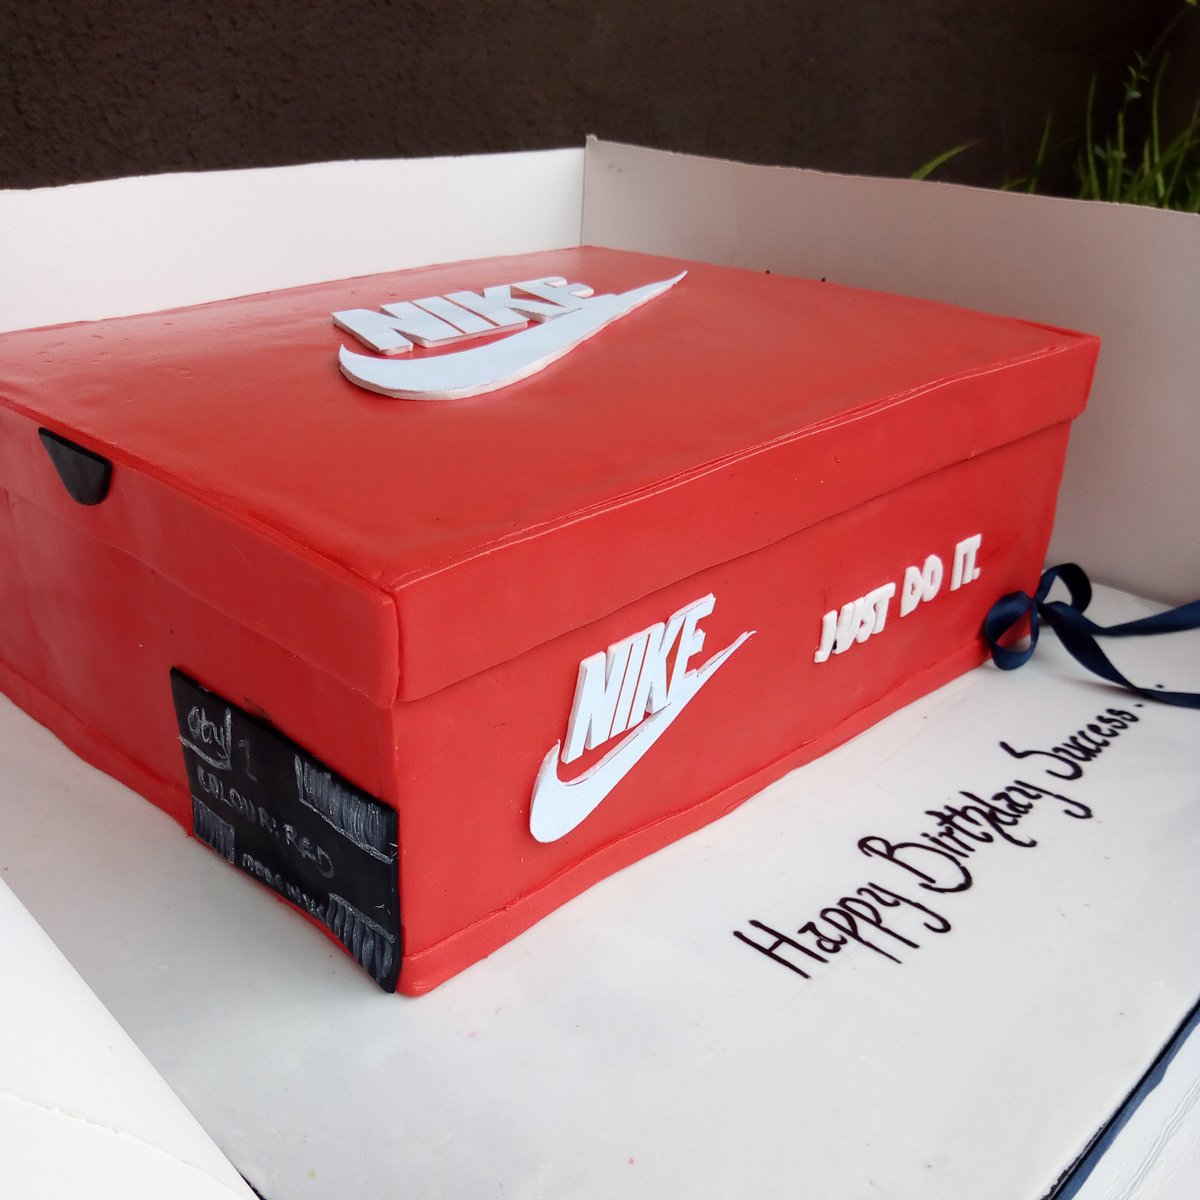 Red Nike shoe box editorial stock image Sneaker Box Label Template - Sneake...